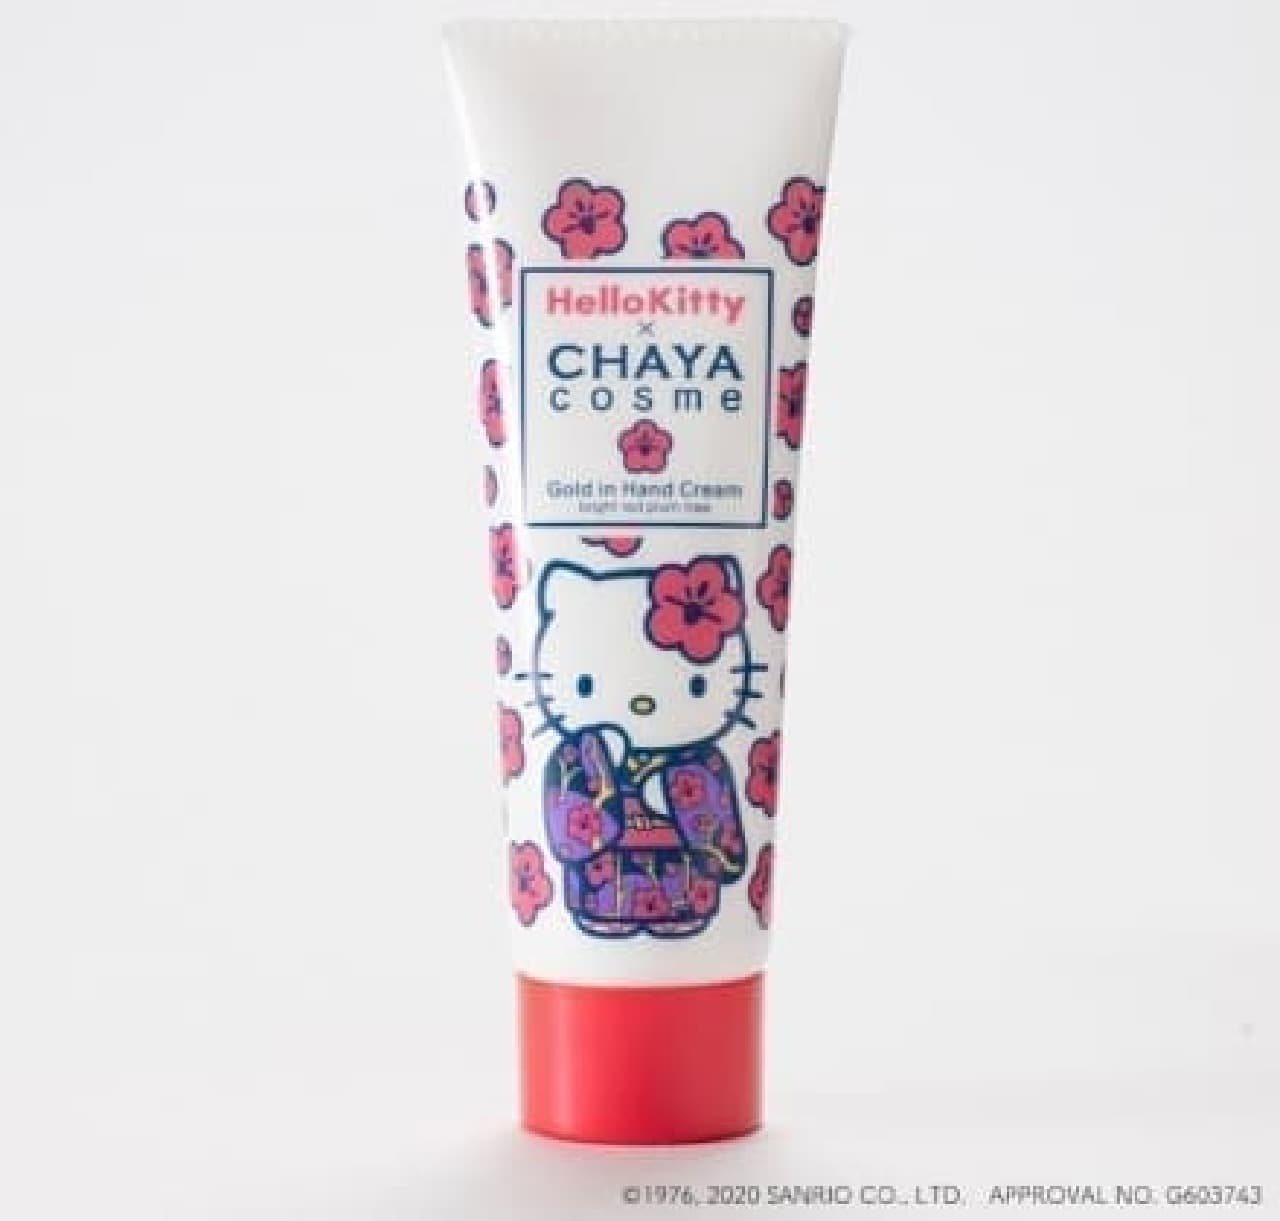 Hello Kitty × CHAYA cosme ゴールドインハンドクリーム